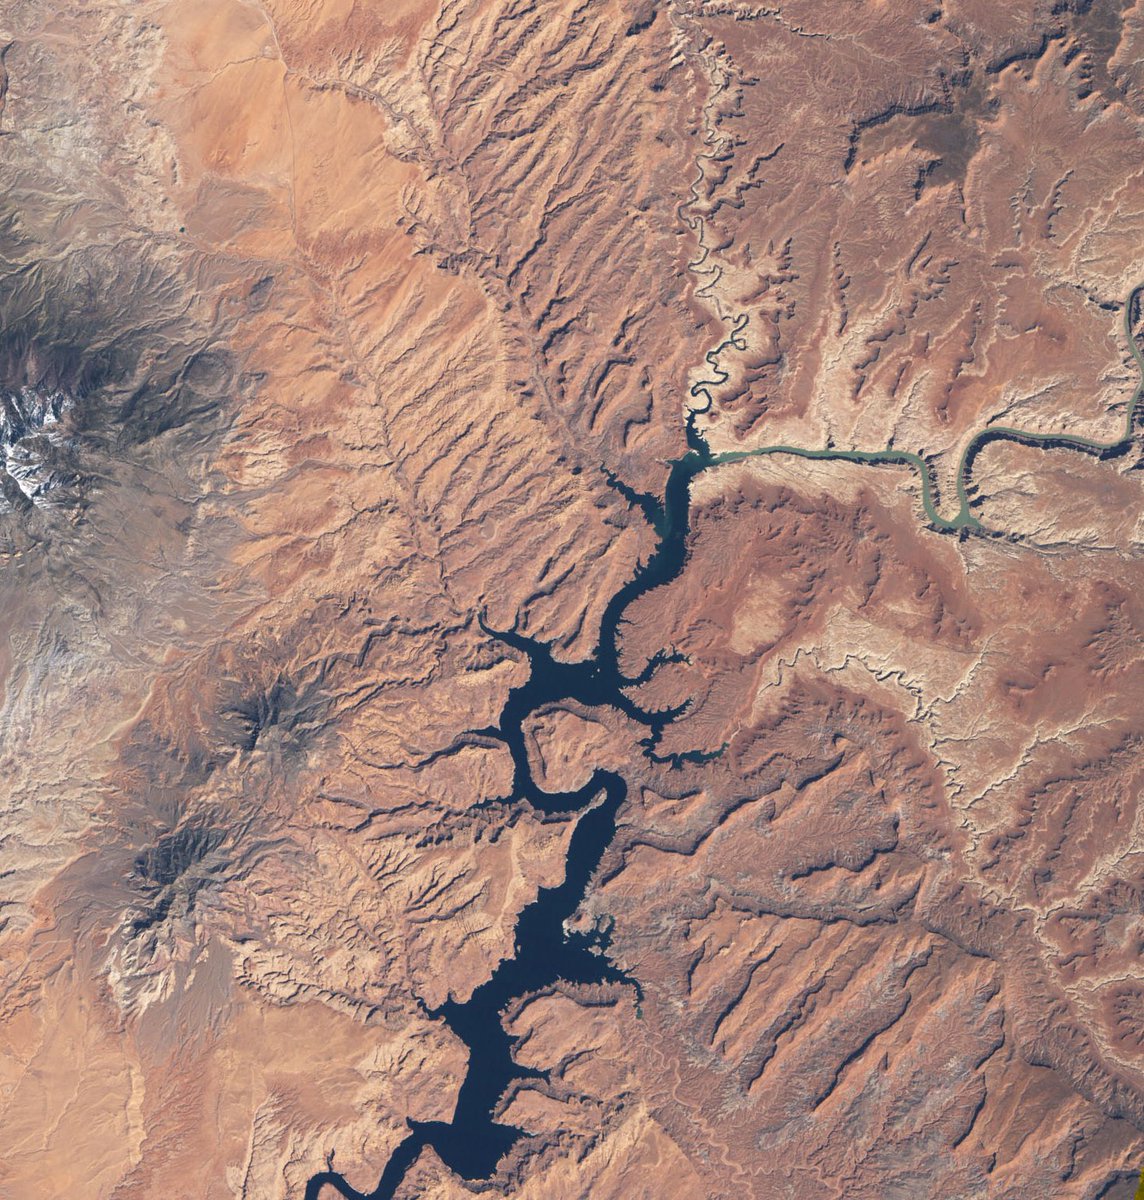 Lake Powell imaged by Landsat satellite